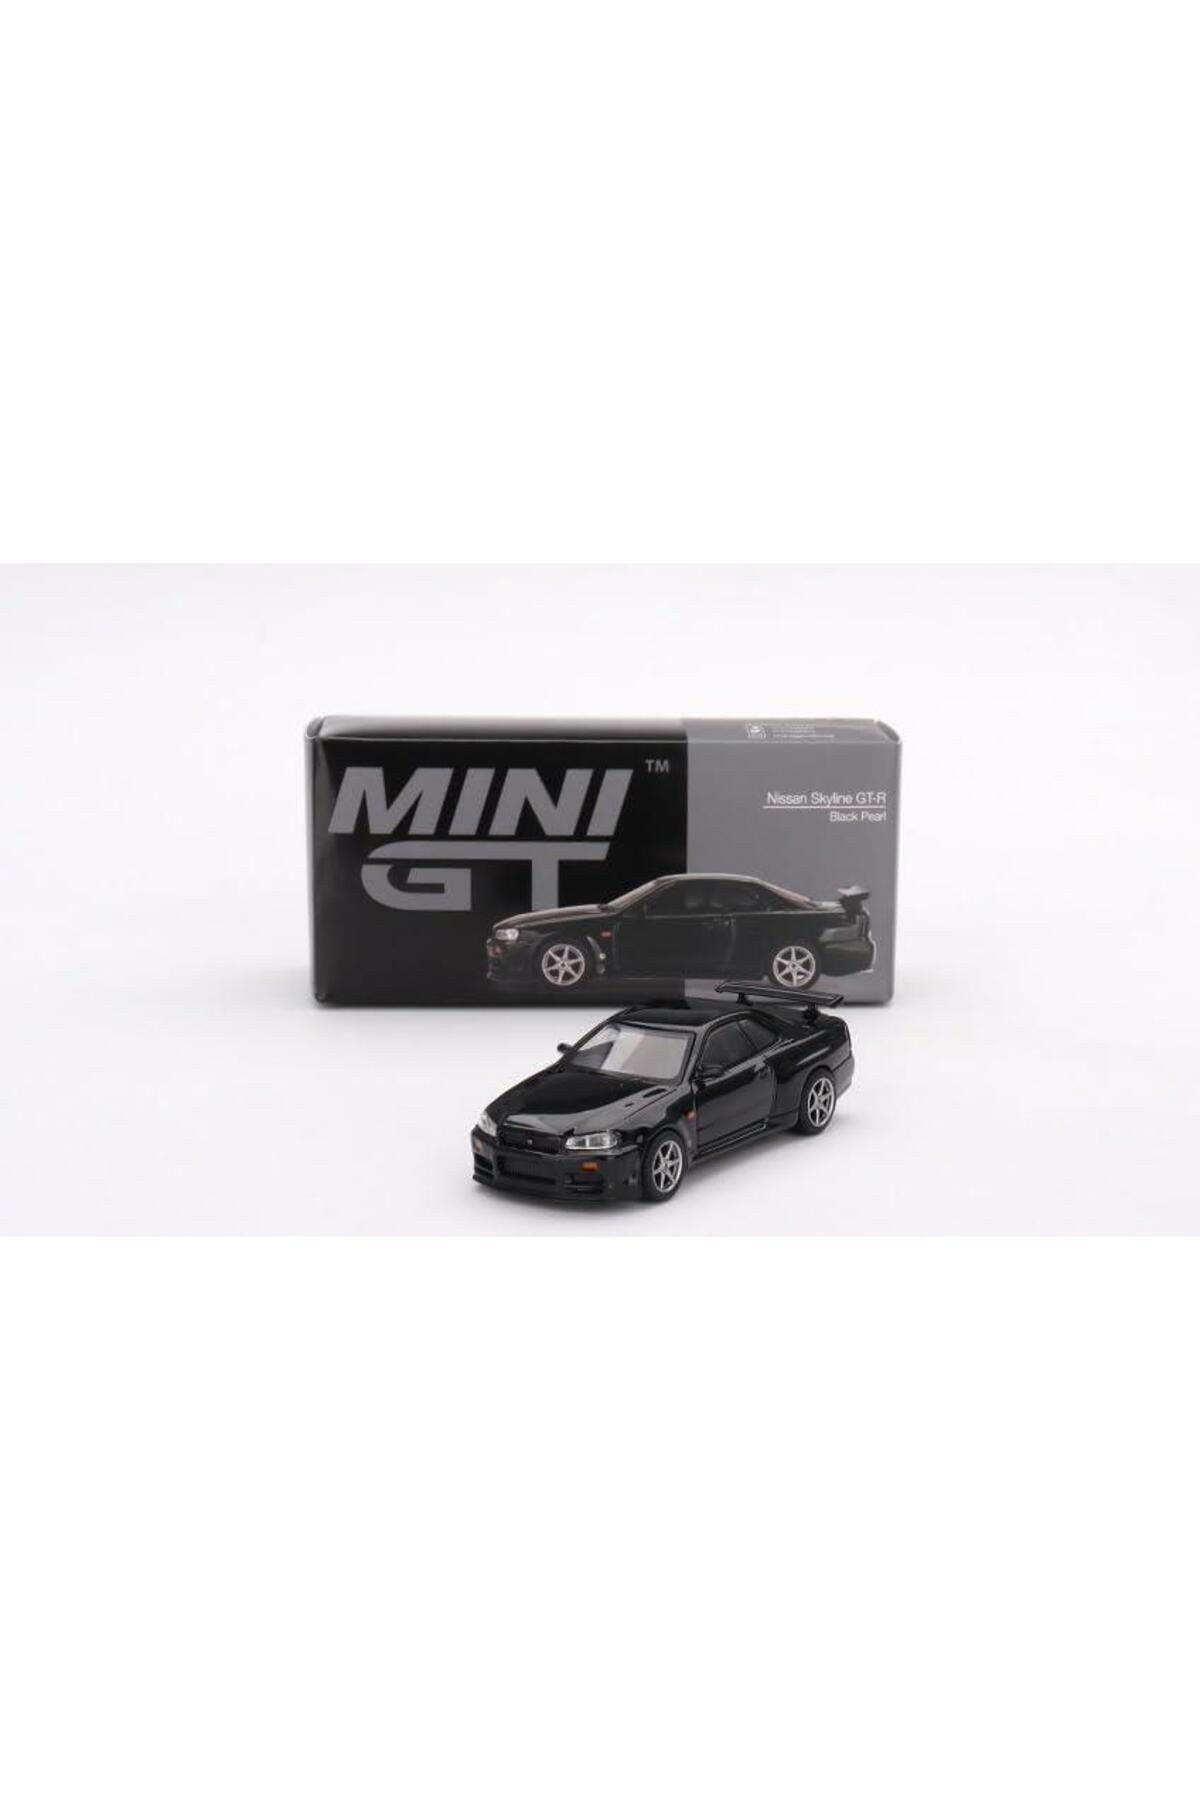 mini gt 570 Nissan Skyline GT-R (R34) V-Spec Black Pearl RHD Model Araba